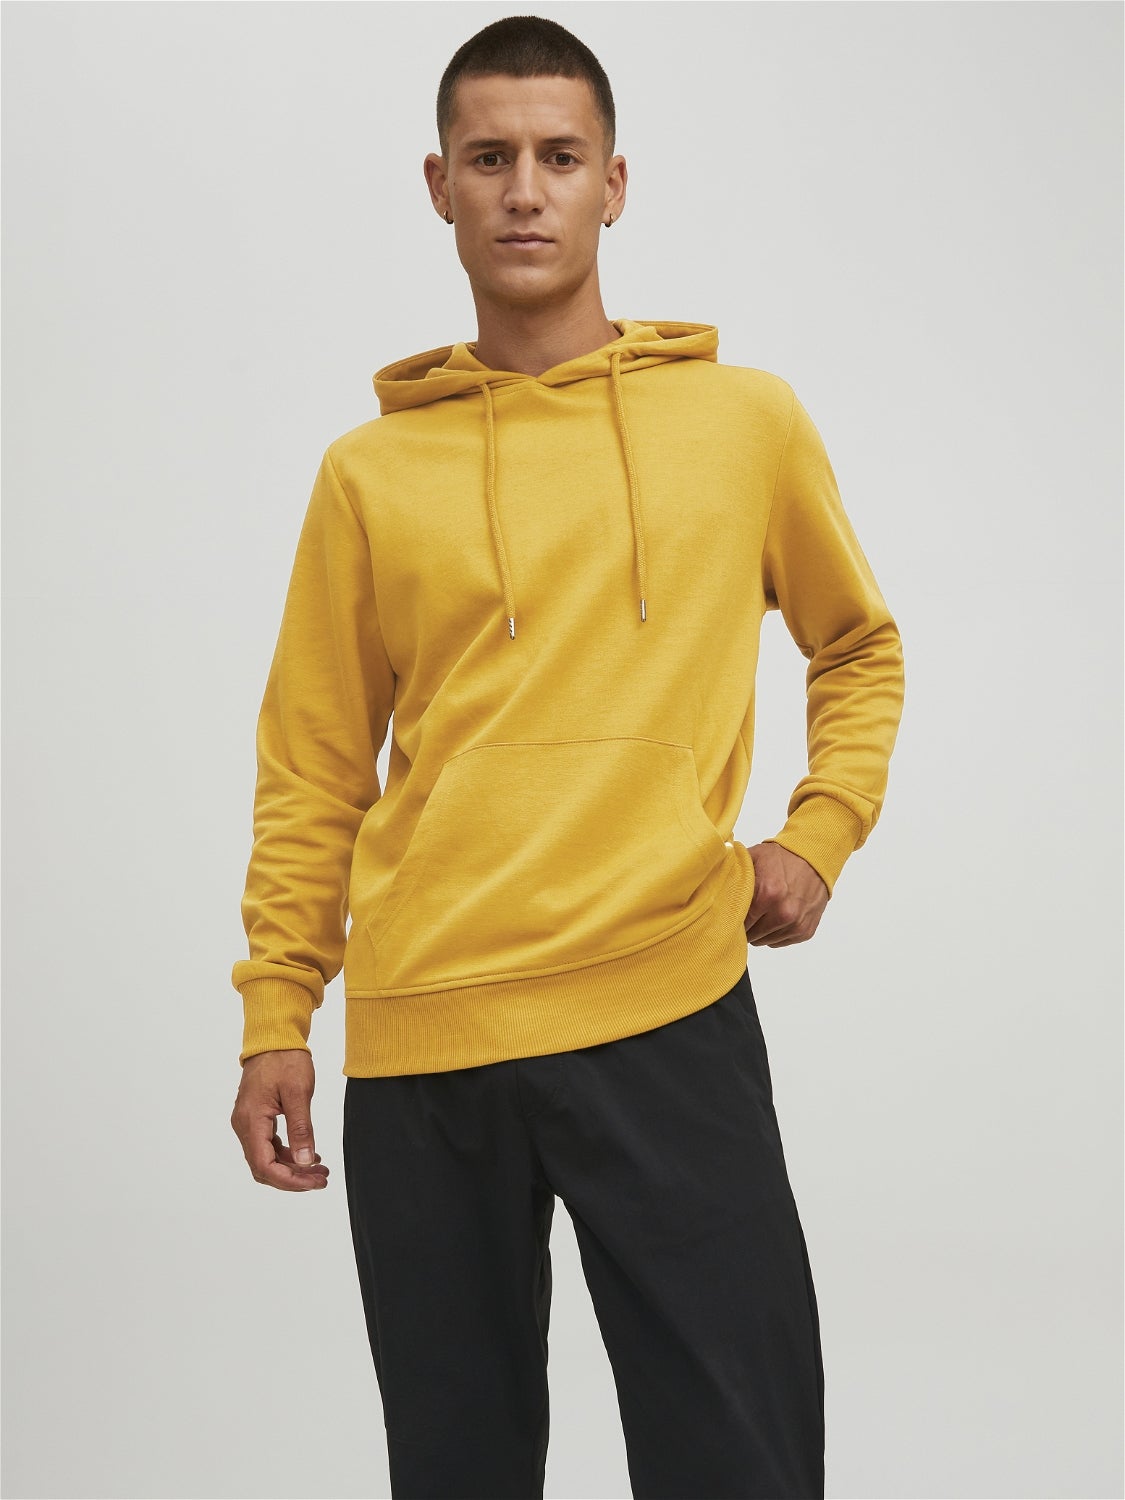 discount 62% Jack & Jones sweatshirt KIDS FASHION Jumpers & Sweatshirts Sports Yellow 152                  EU 